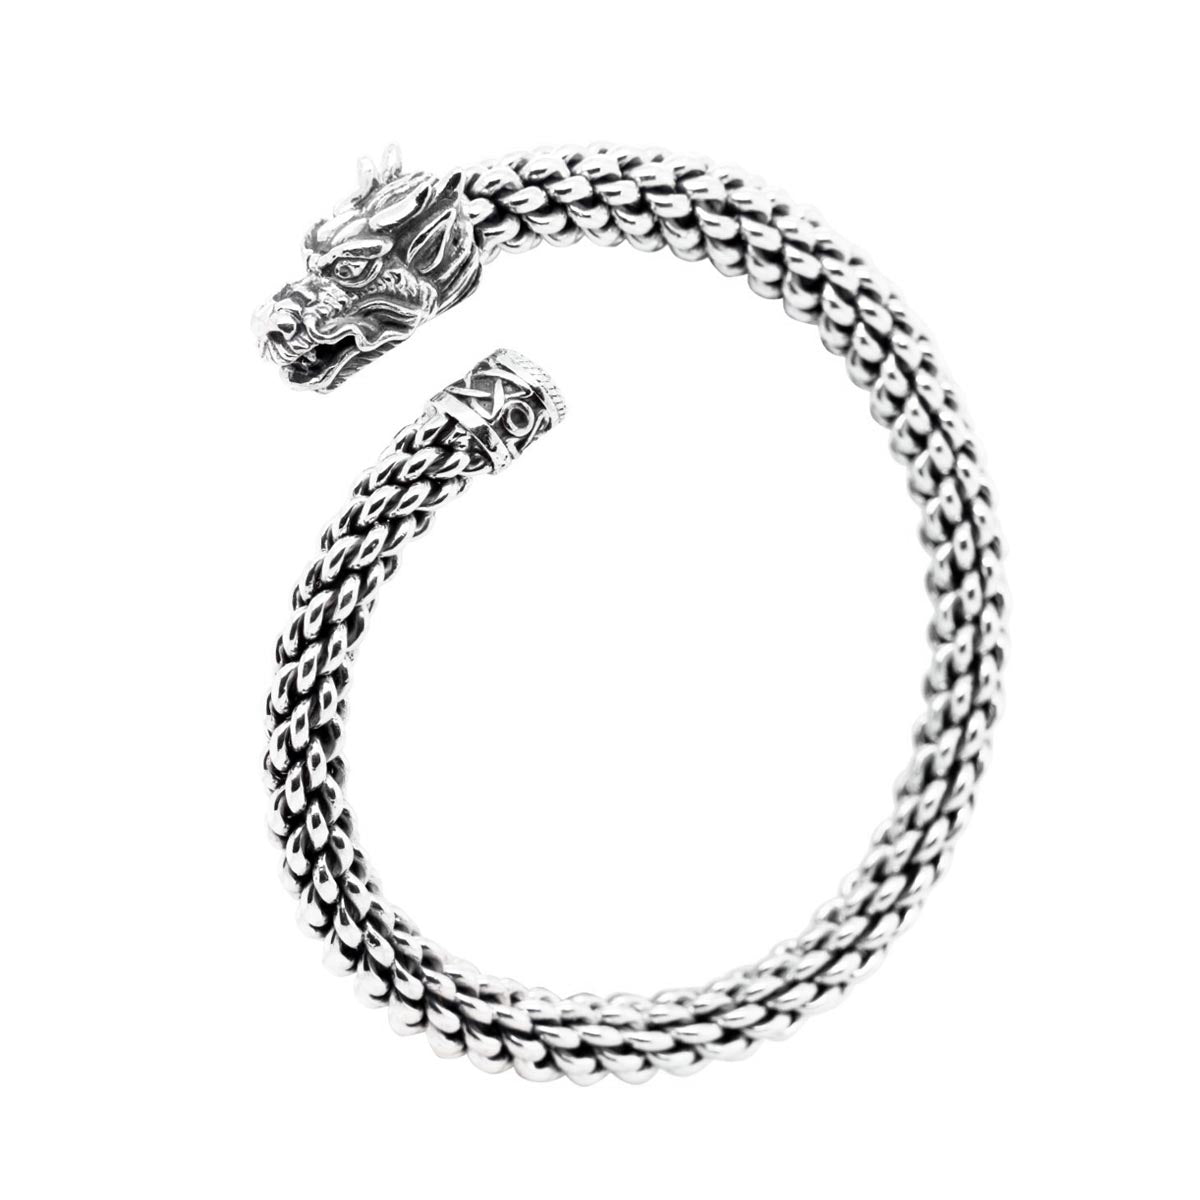 Keith Jack Dragon Torc Bangle Bracelet in Sterling Silver